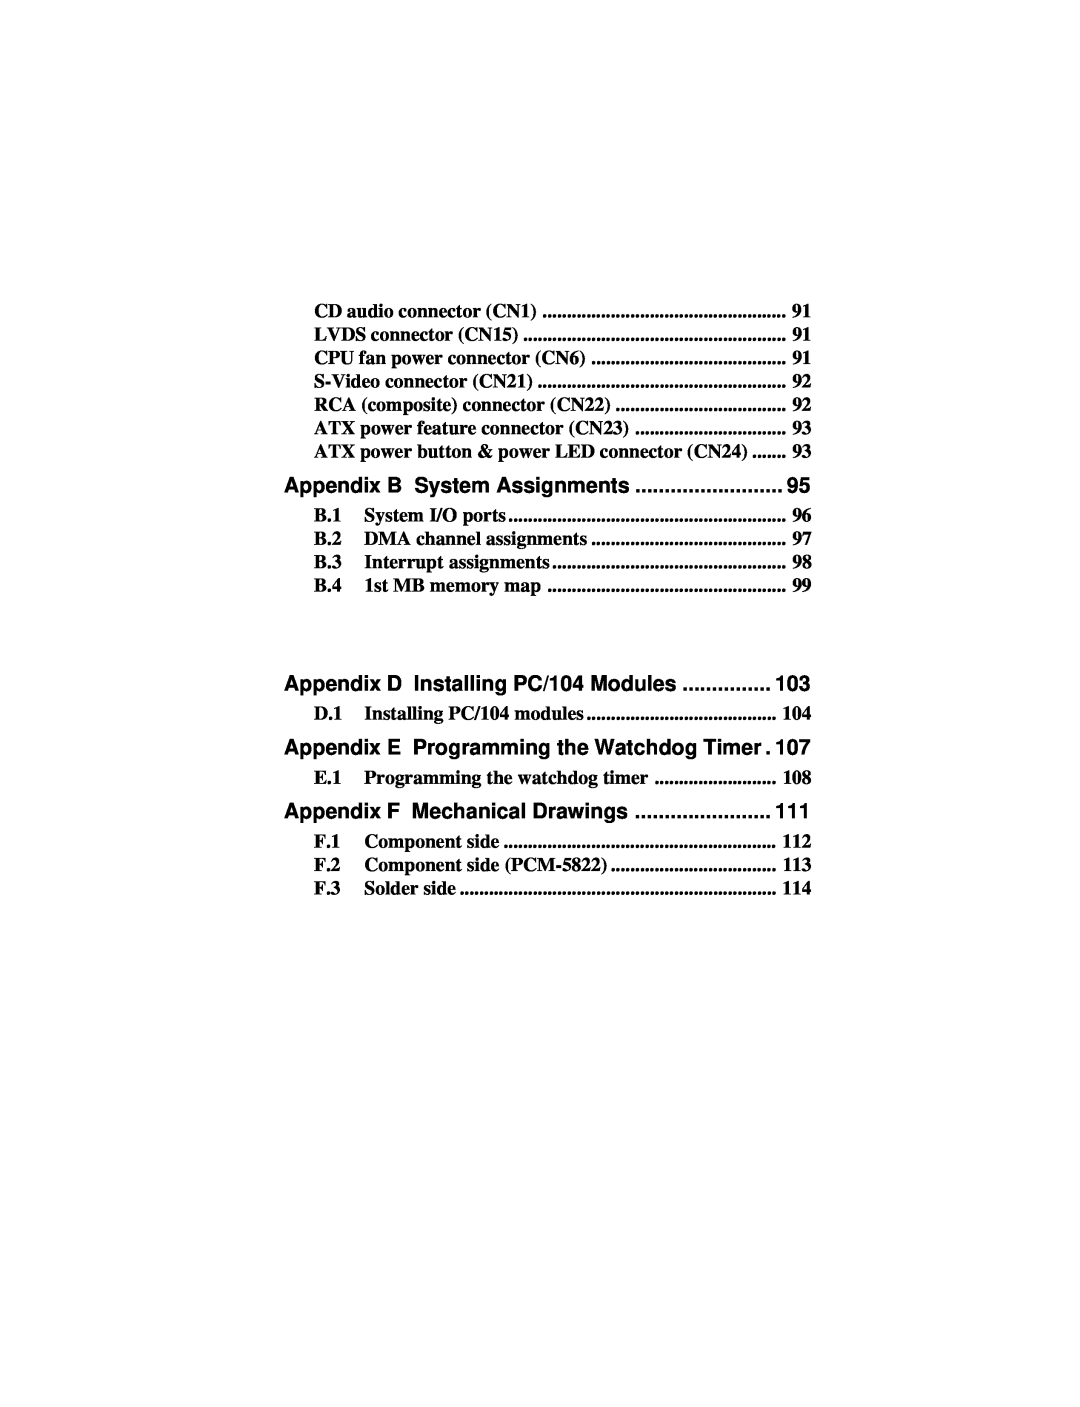 AMD PCM-5820 manual Appendix B System Assignments, Appendix D Installing PC/104 Modules, Appendix F Mechanical Drawings 